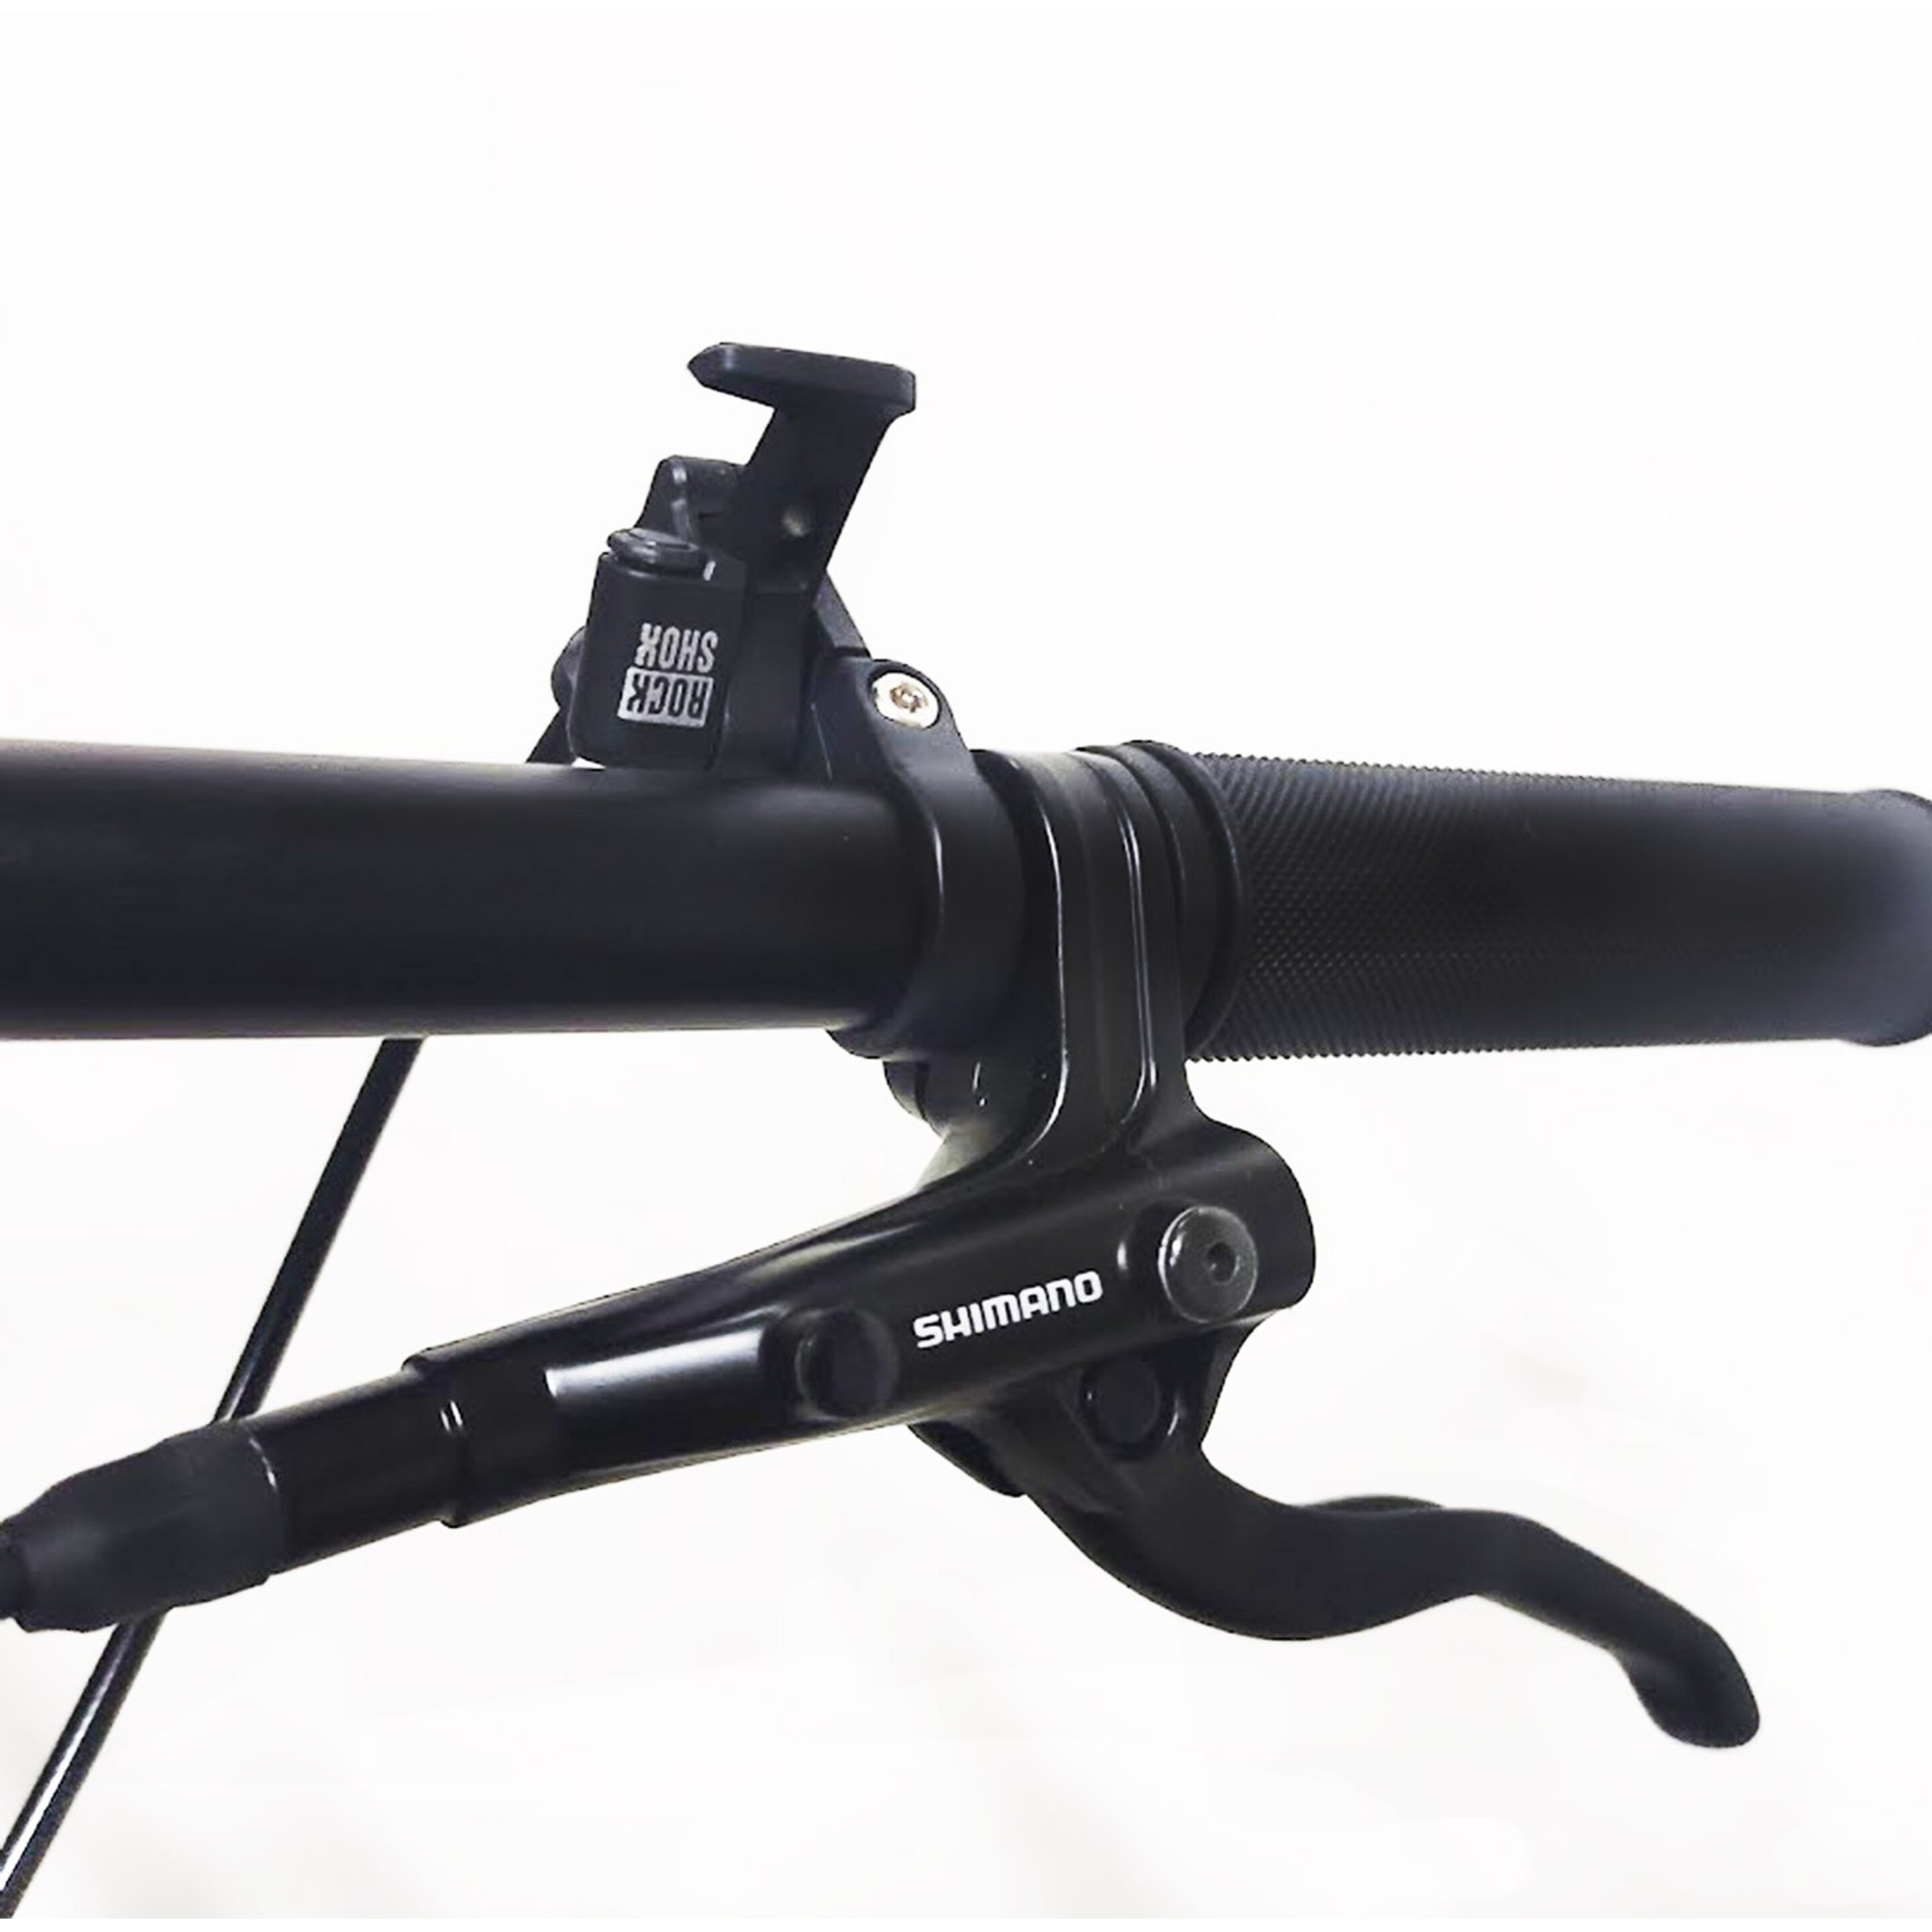 Bicicleta Btt 29" Cloot Prolevel 9.4 New Rockshox Judy - Cinzento | Sport Zone MKP